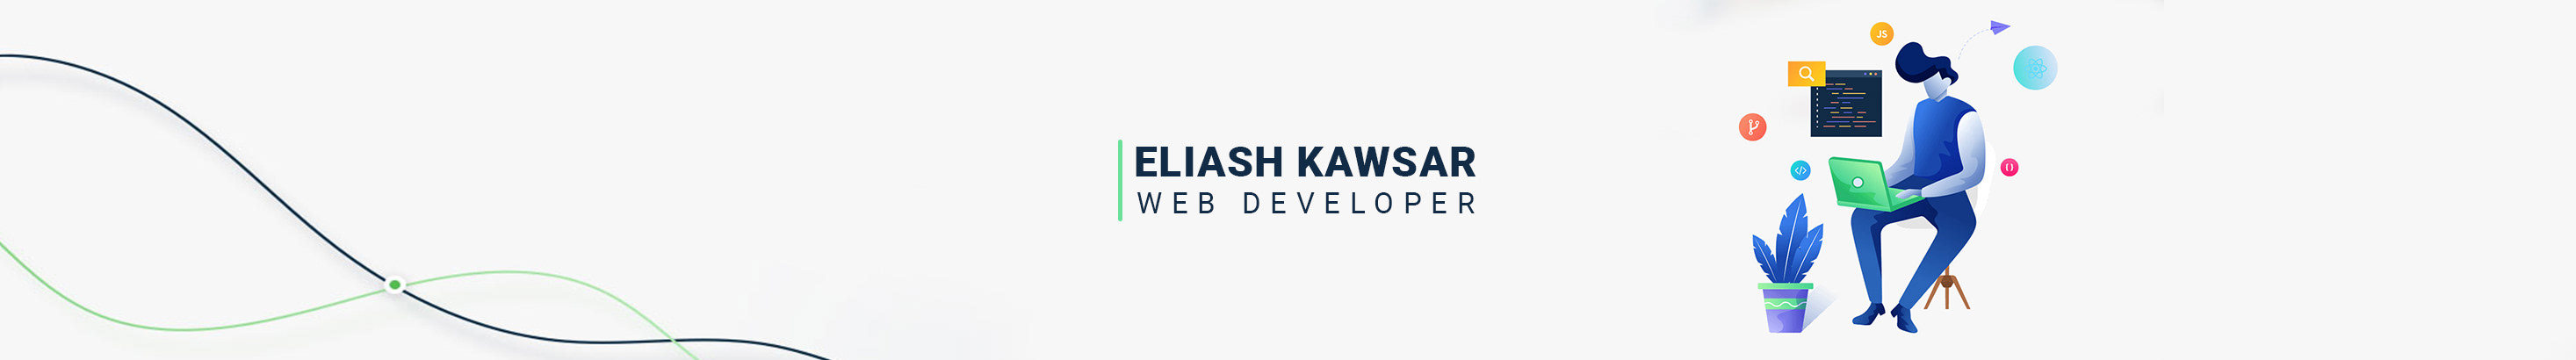 ELIASH KAWSAR's profile banner